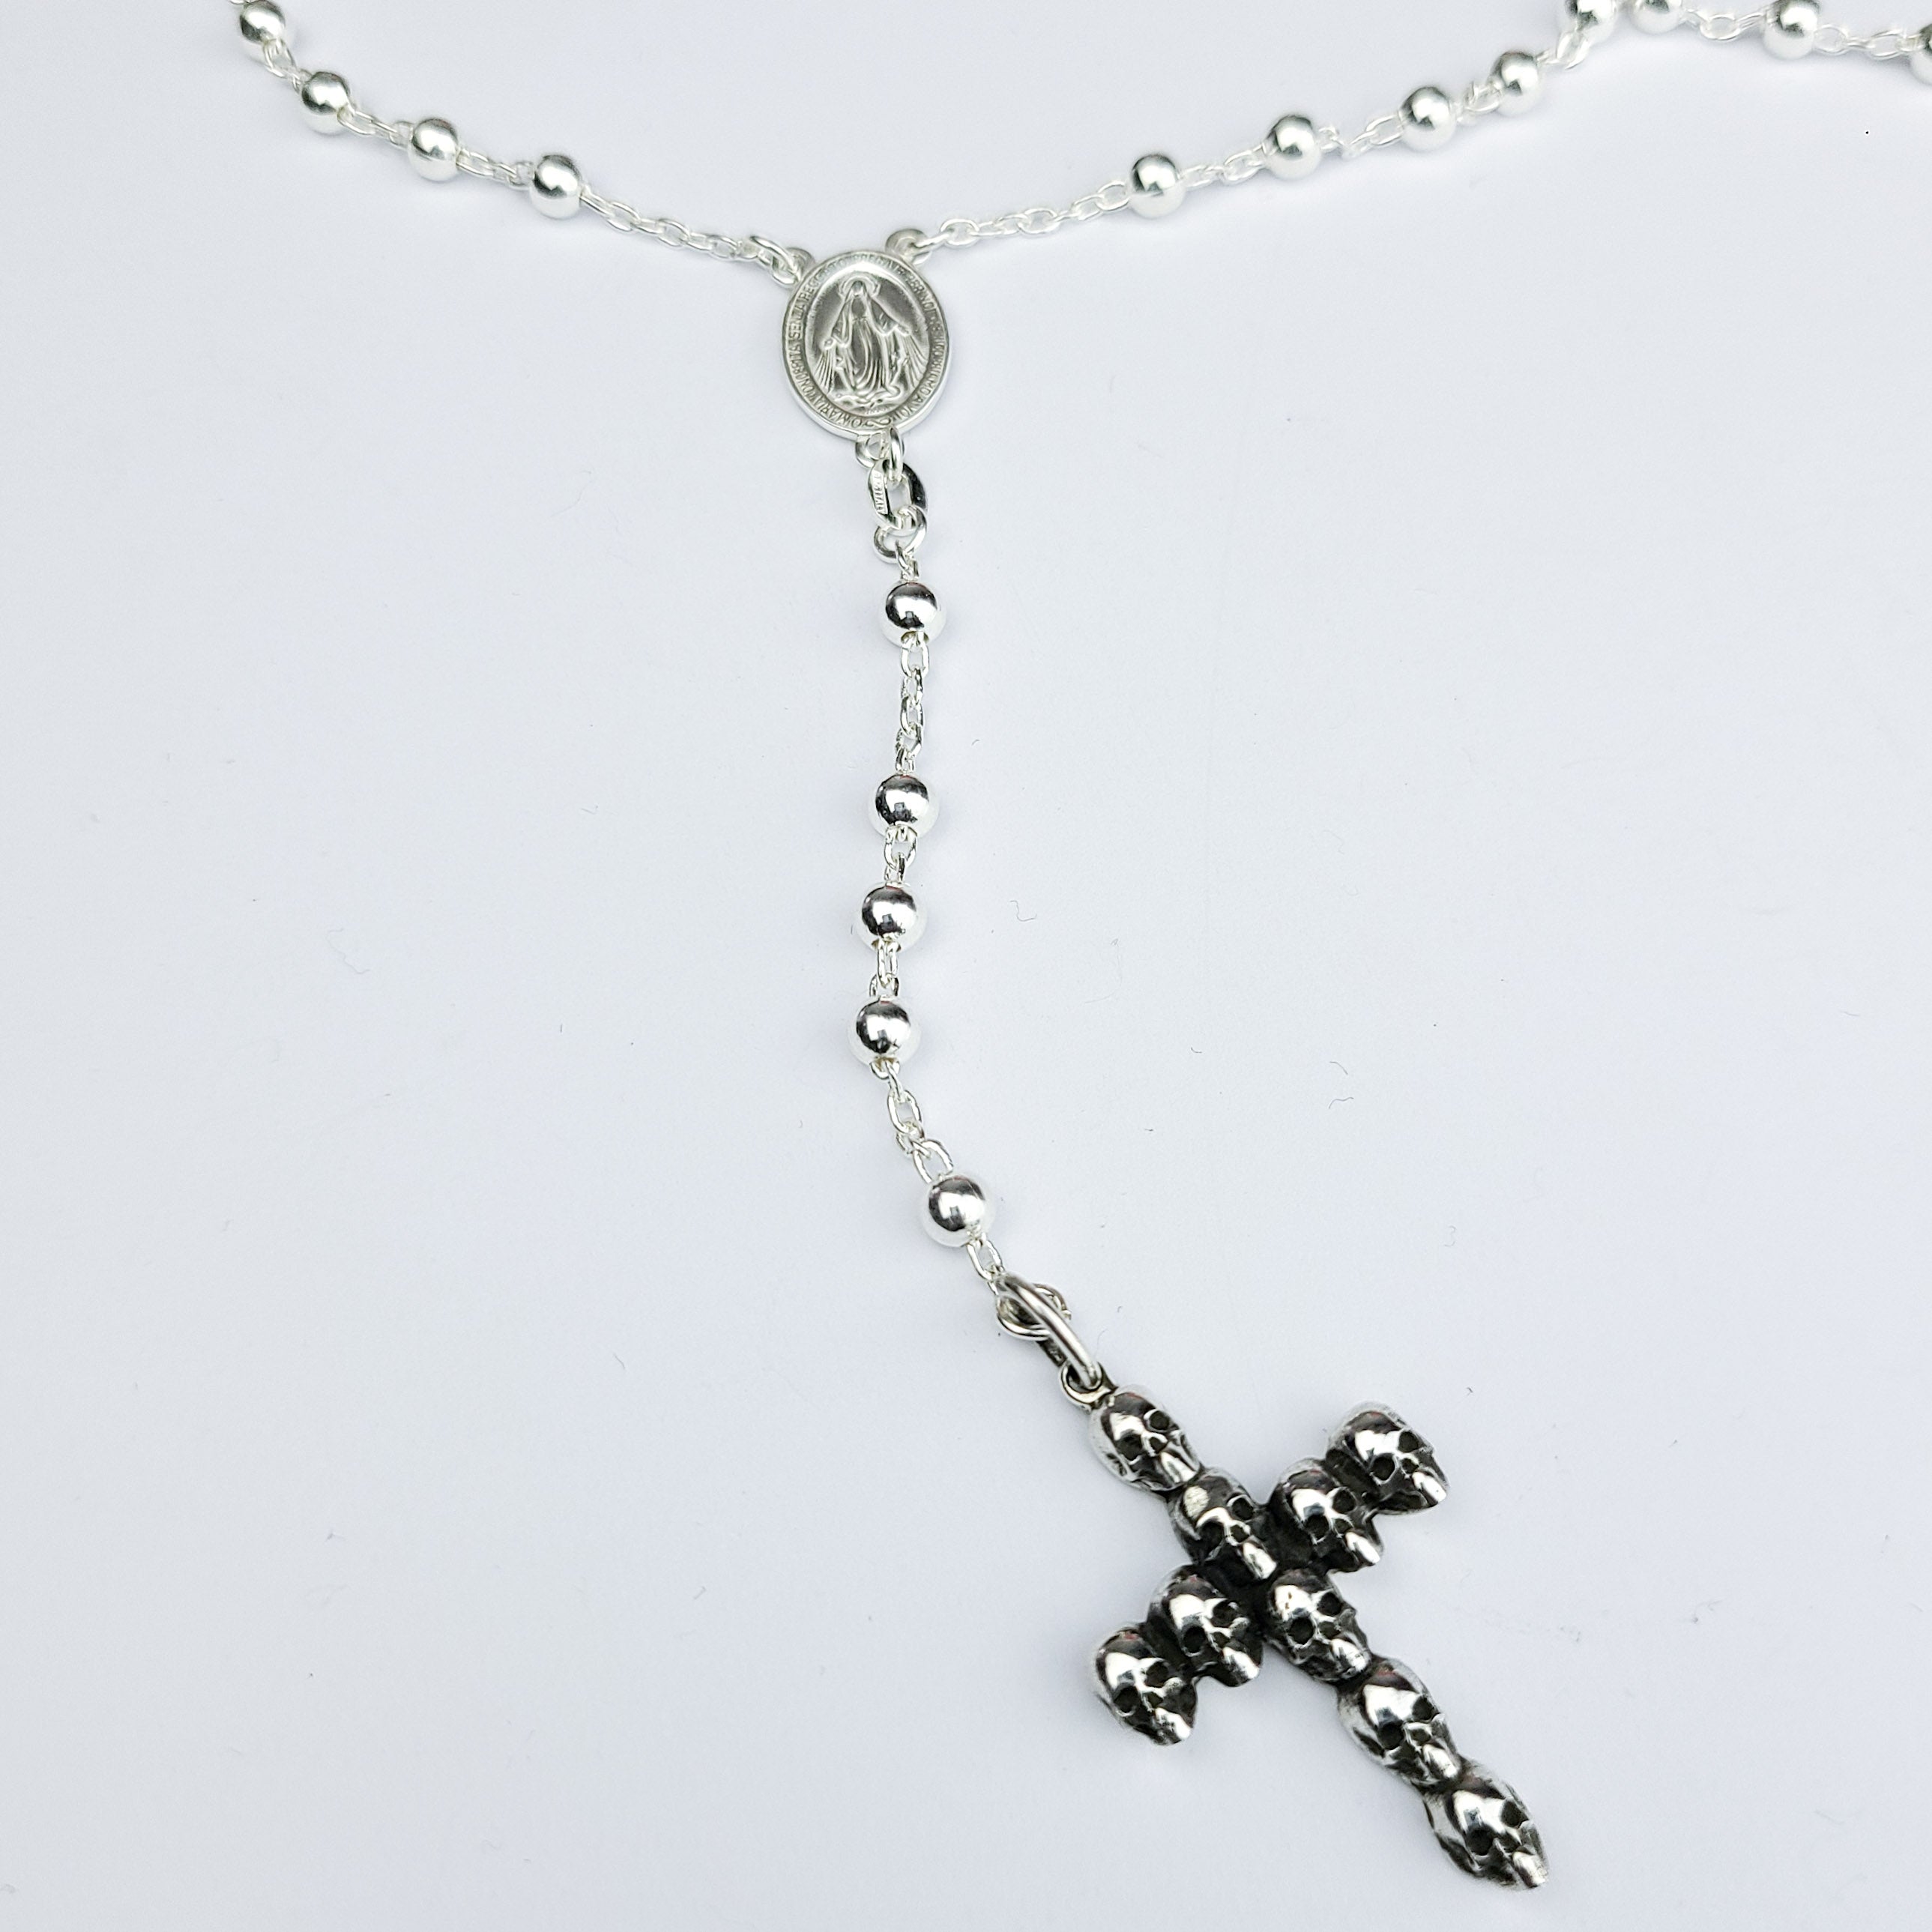 4mm Rosary Prayer Bead Necklace